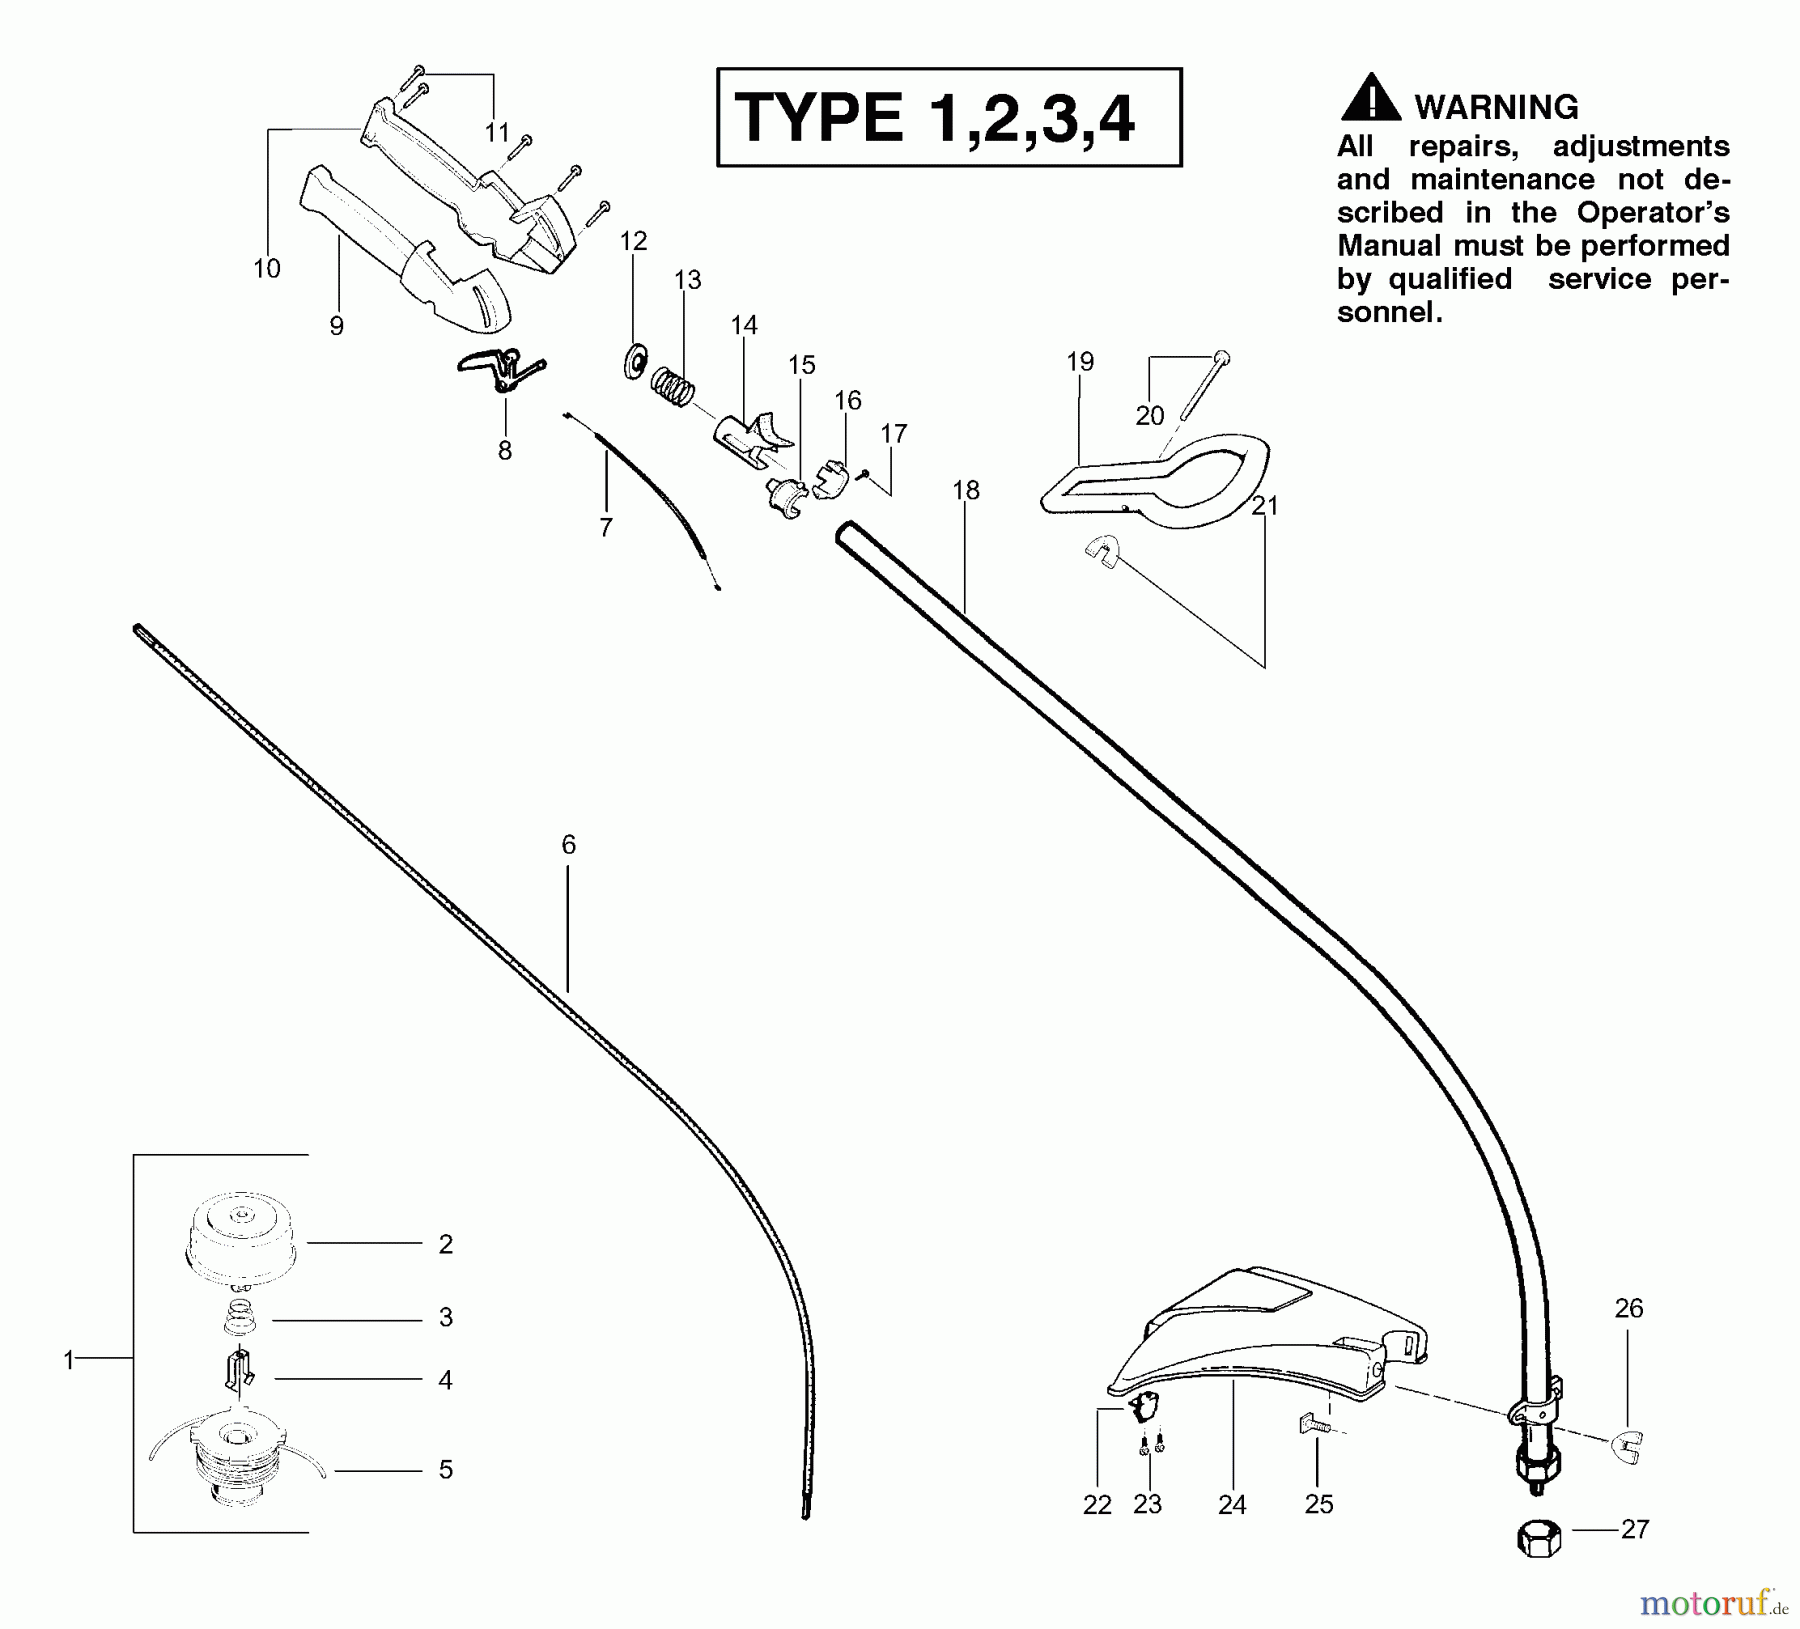  Poulan / Weed Eater Motorsensen, Trimmer XT400 (Type 2) - Weed Eater String Trimmer Handle & Shaft Assembly